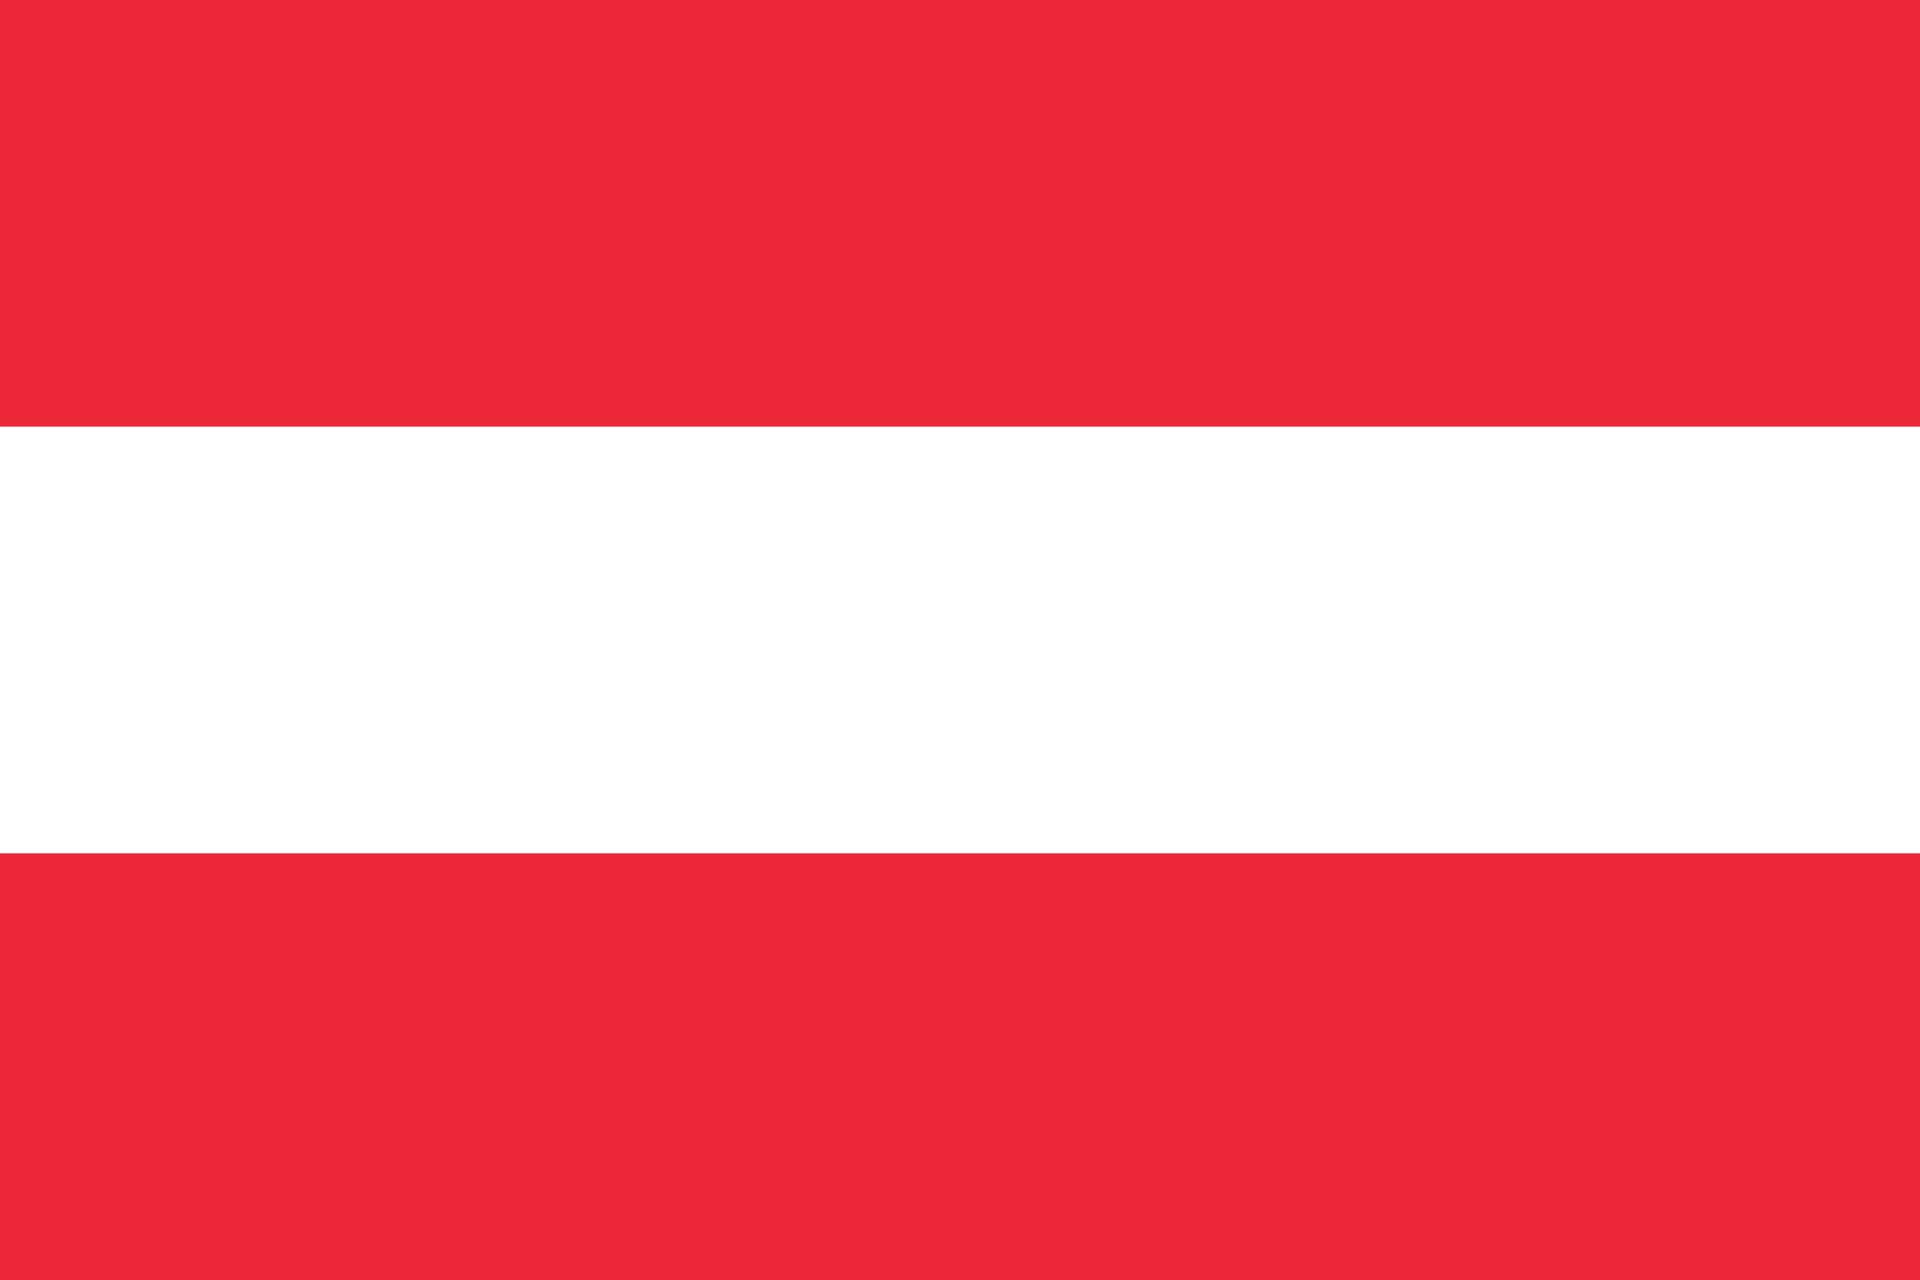 The Flag Of Austria